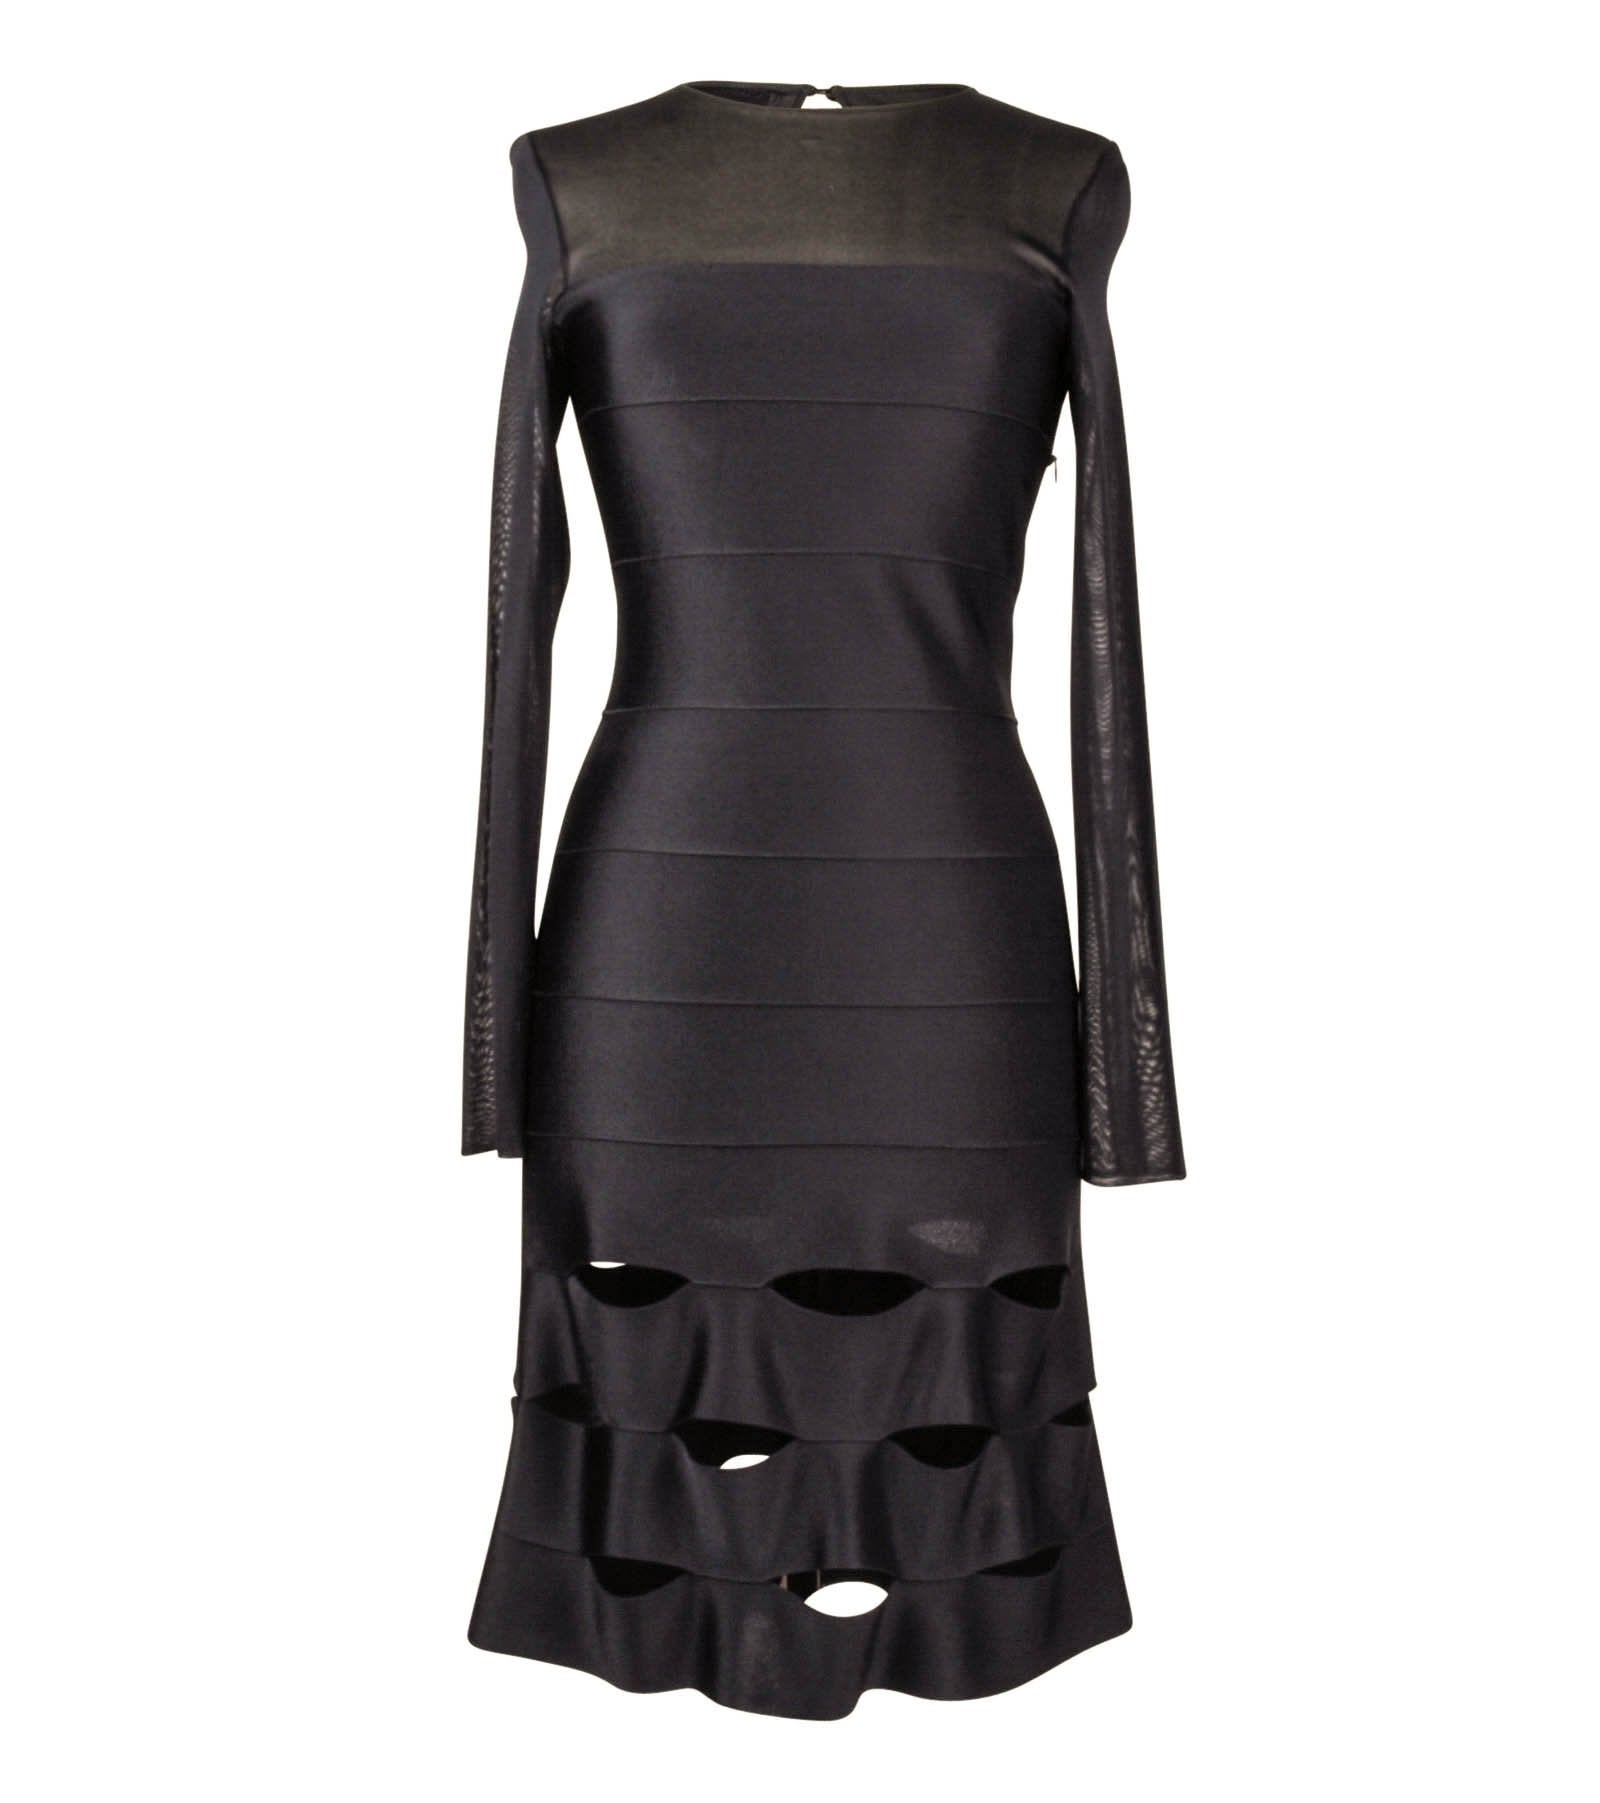 Christian Dior Dress Black Bandage and Mesh 40 / 8